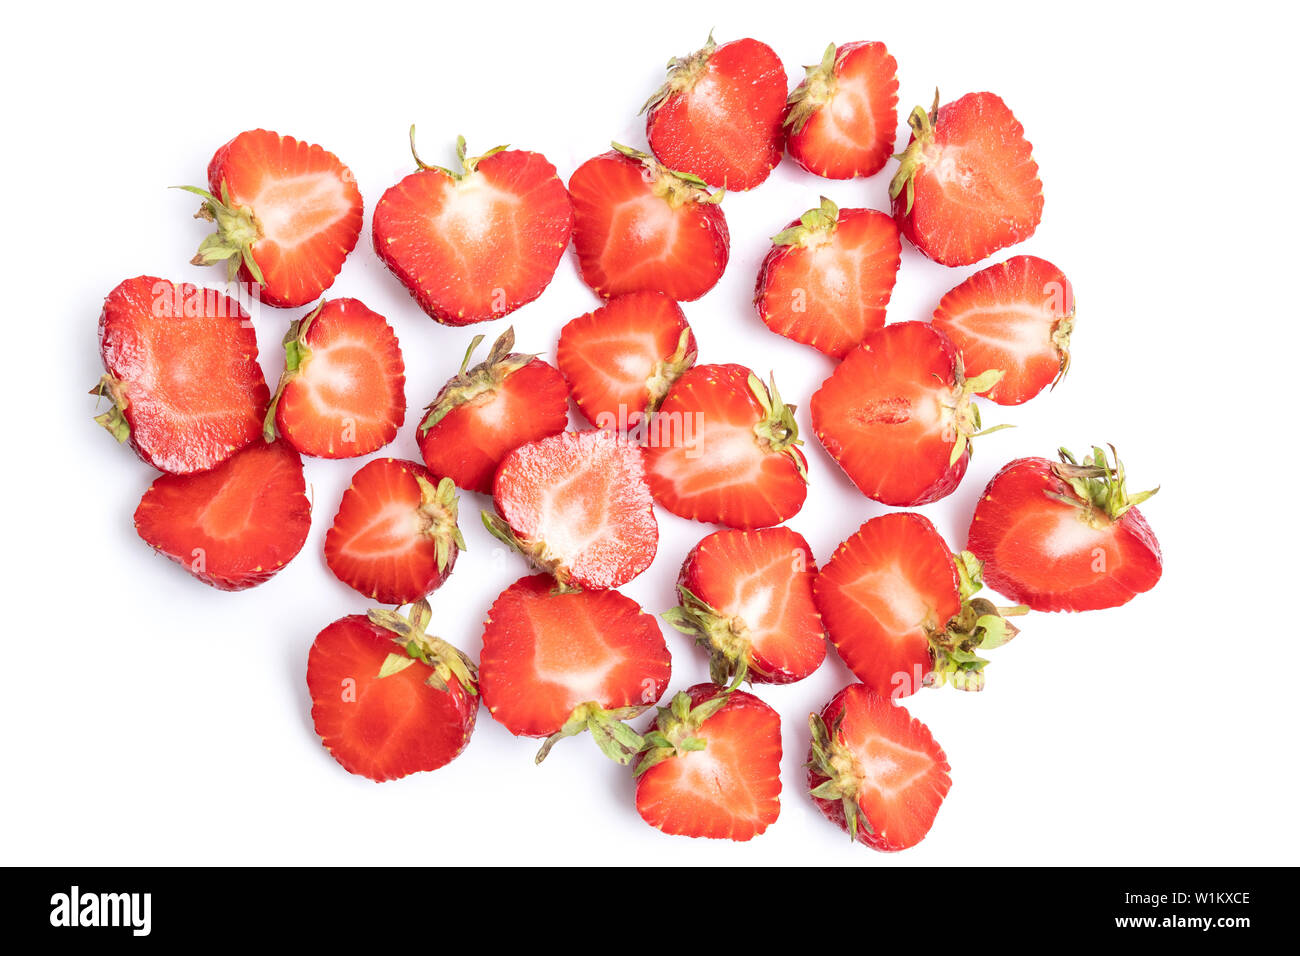 Descripción: fresas rojas frescas aislado sobre un fondo blanco. Foto de stock